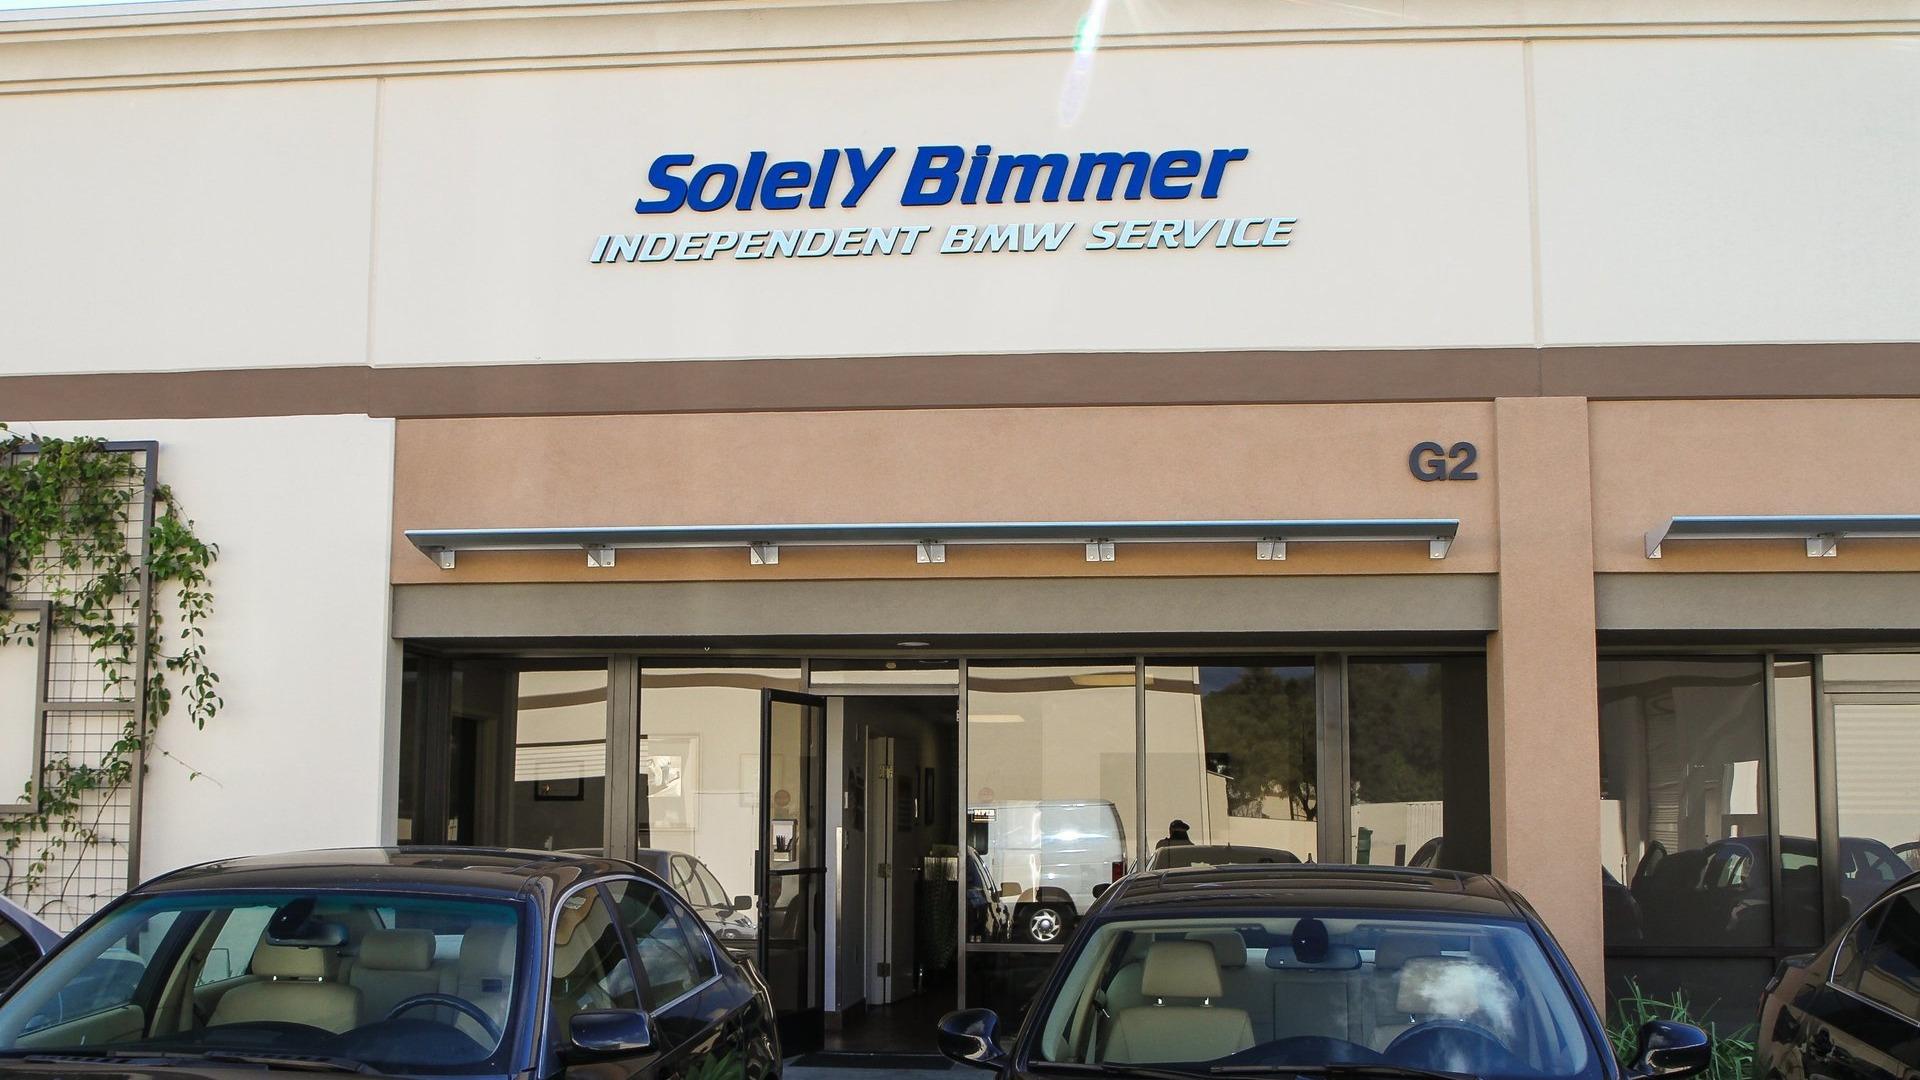 Solely Bimmer Professional BMW Service